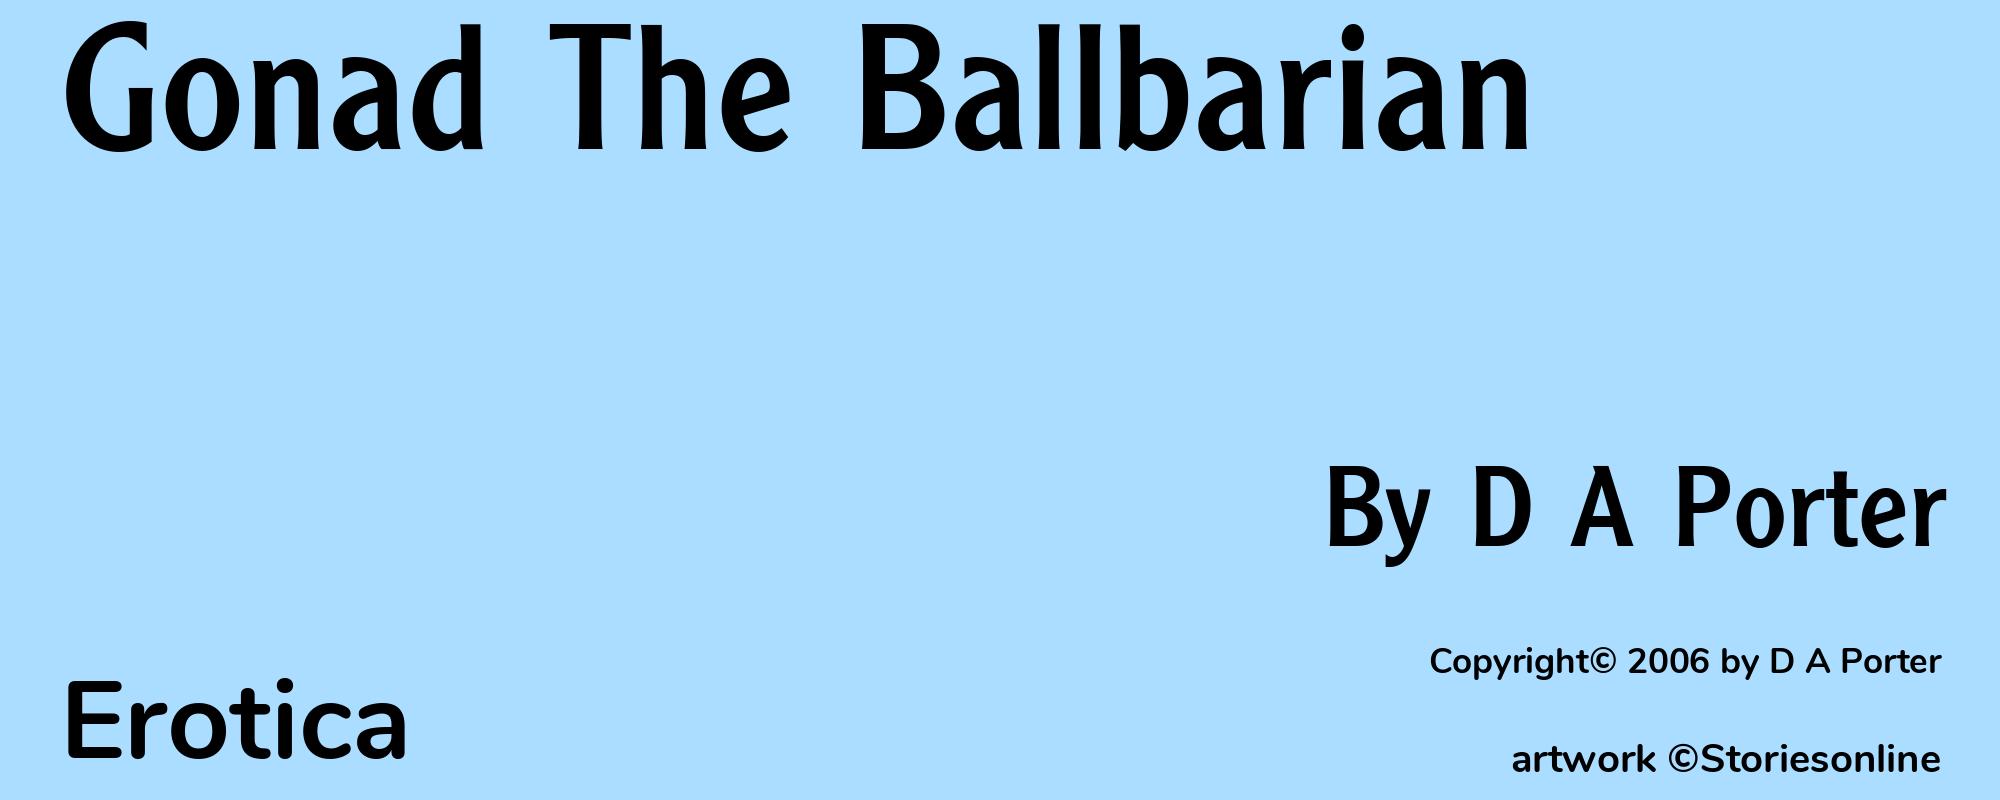 Gonad The Ballbarian - Cover